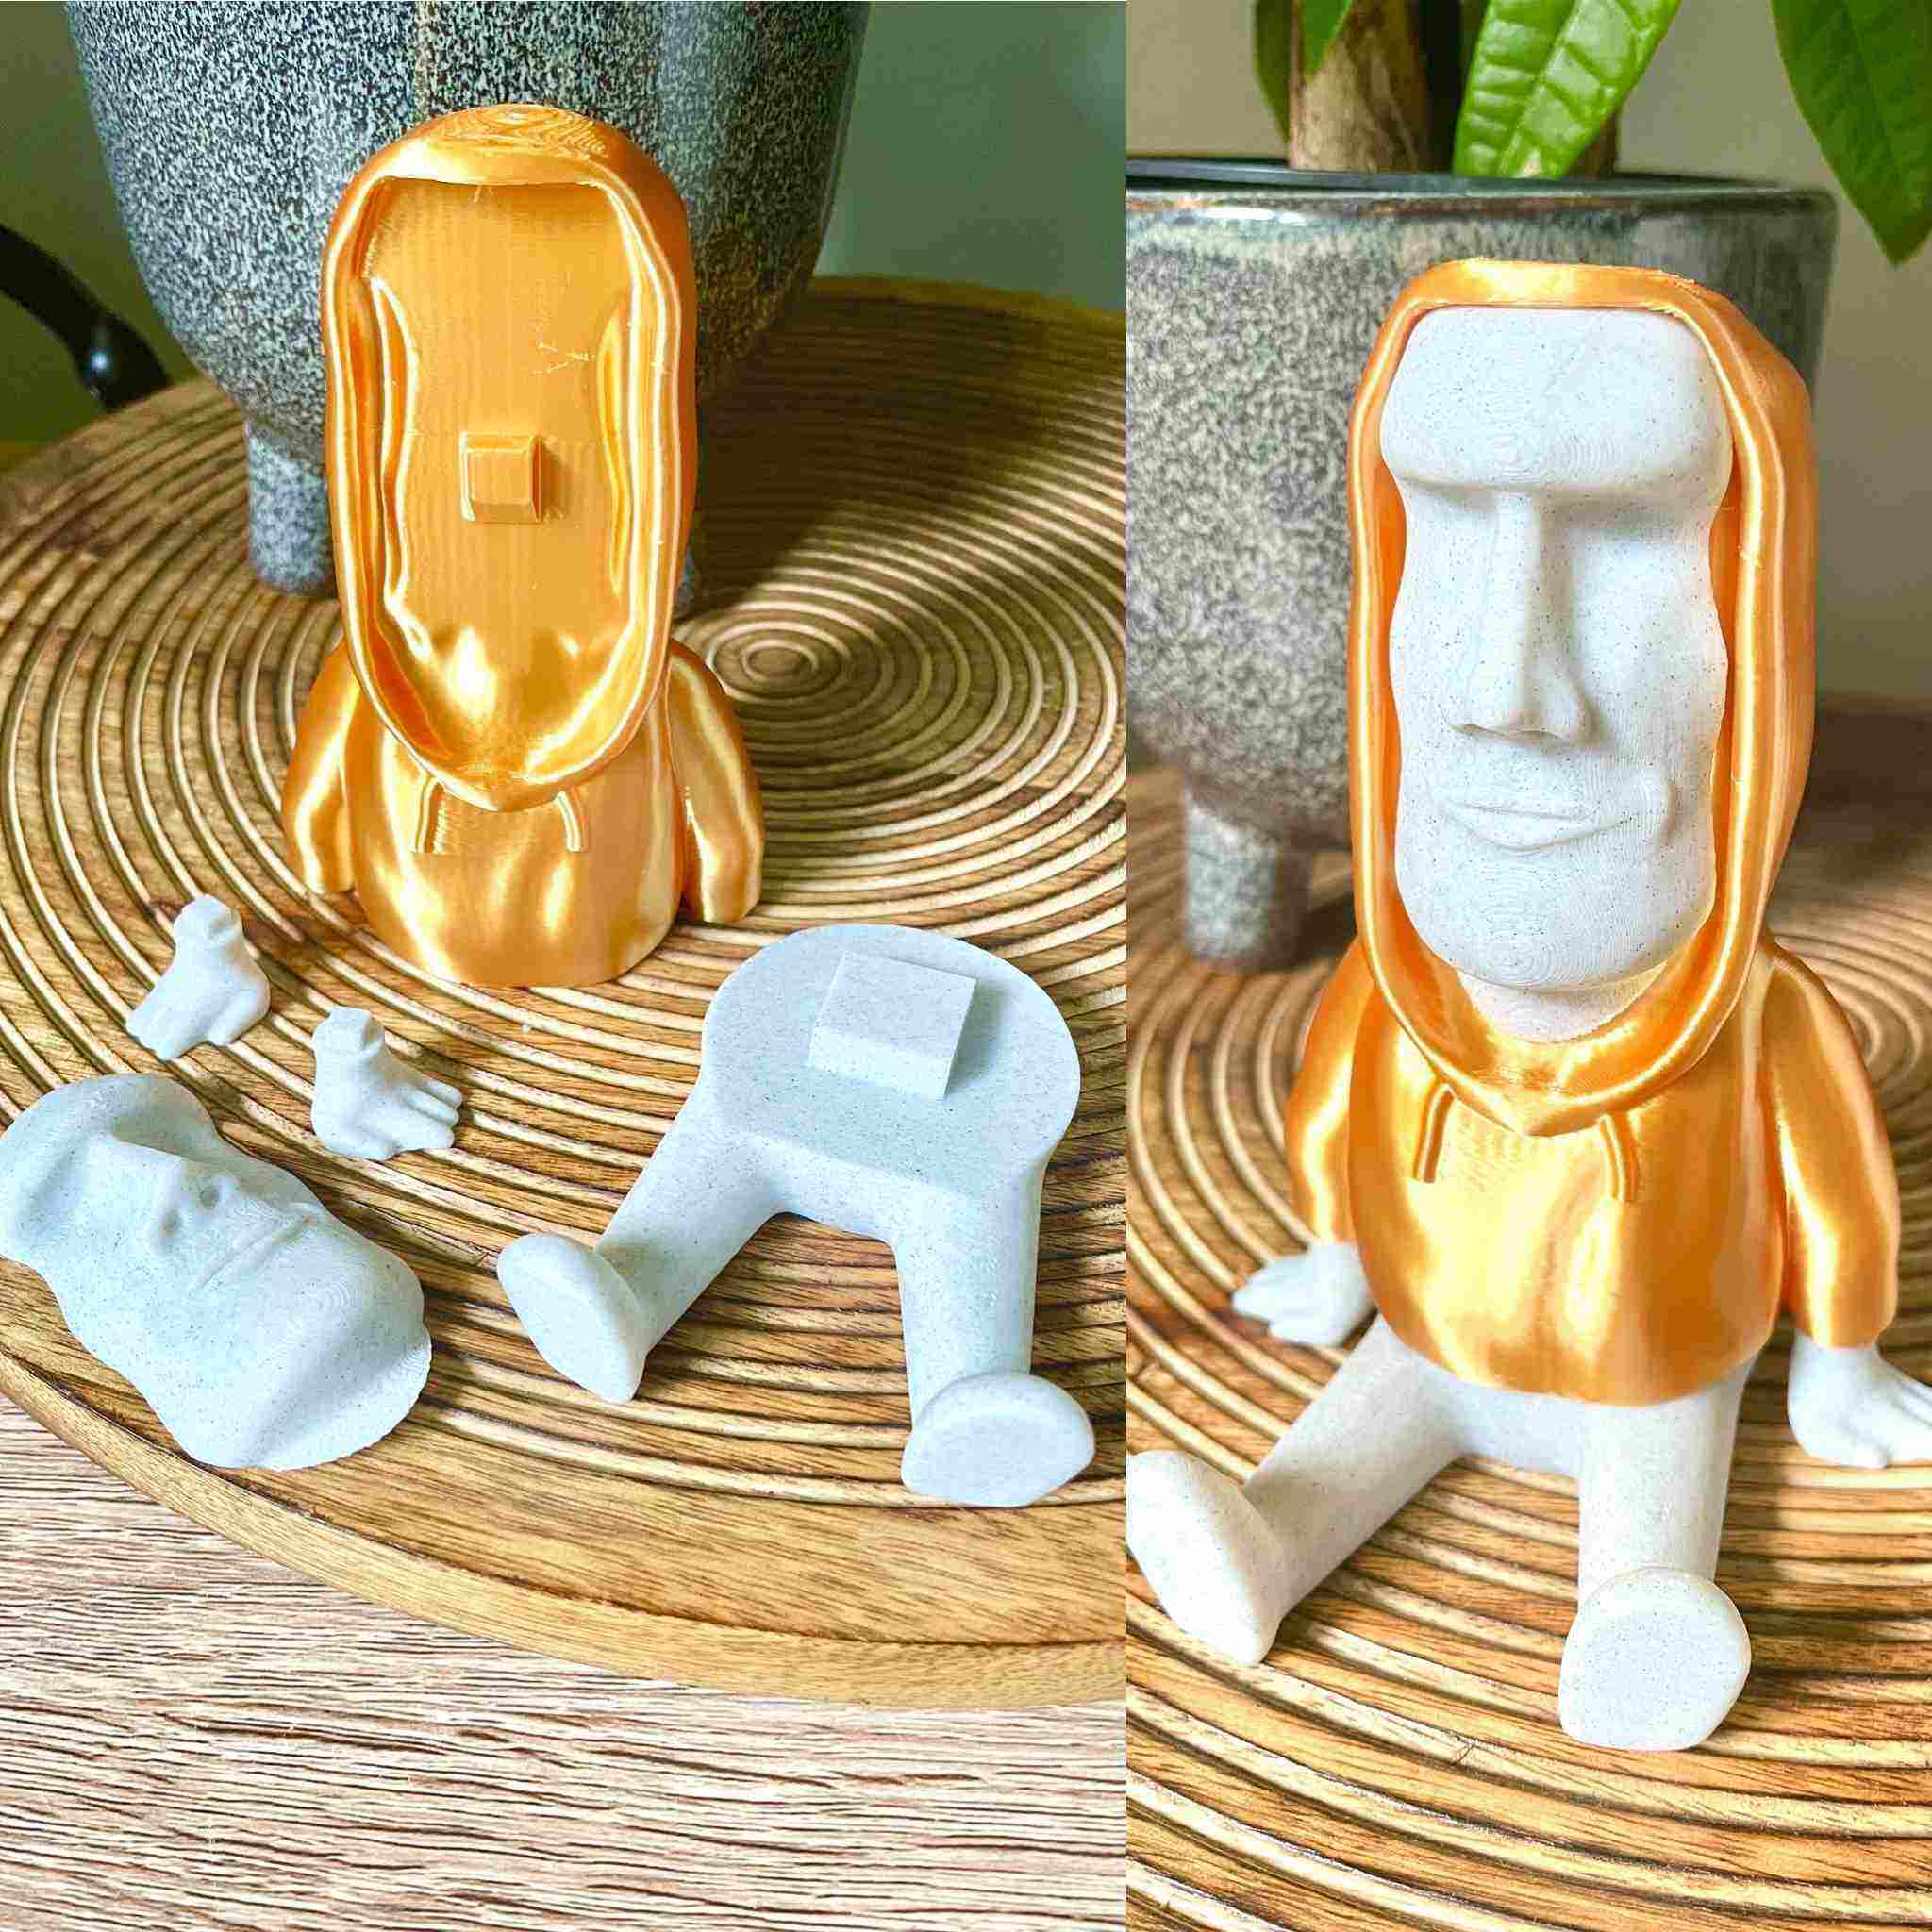 Moai Emoji Accessories for Sale